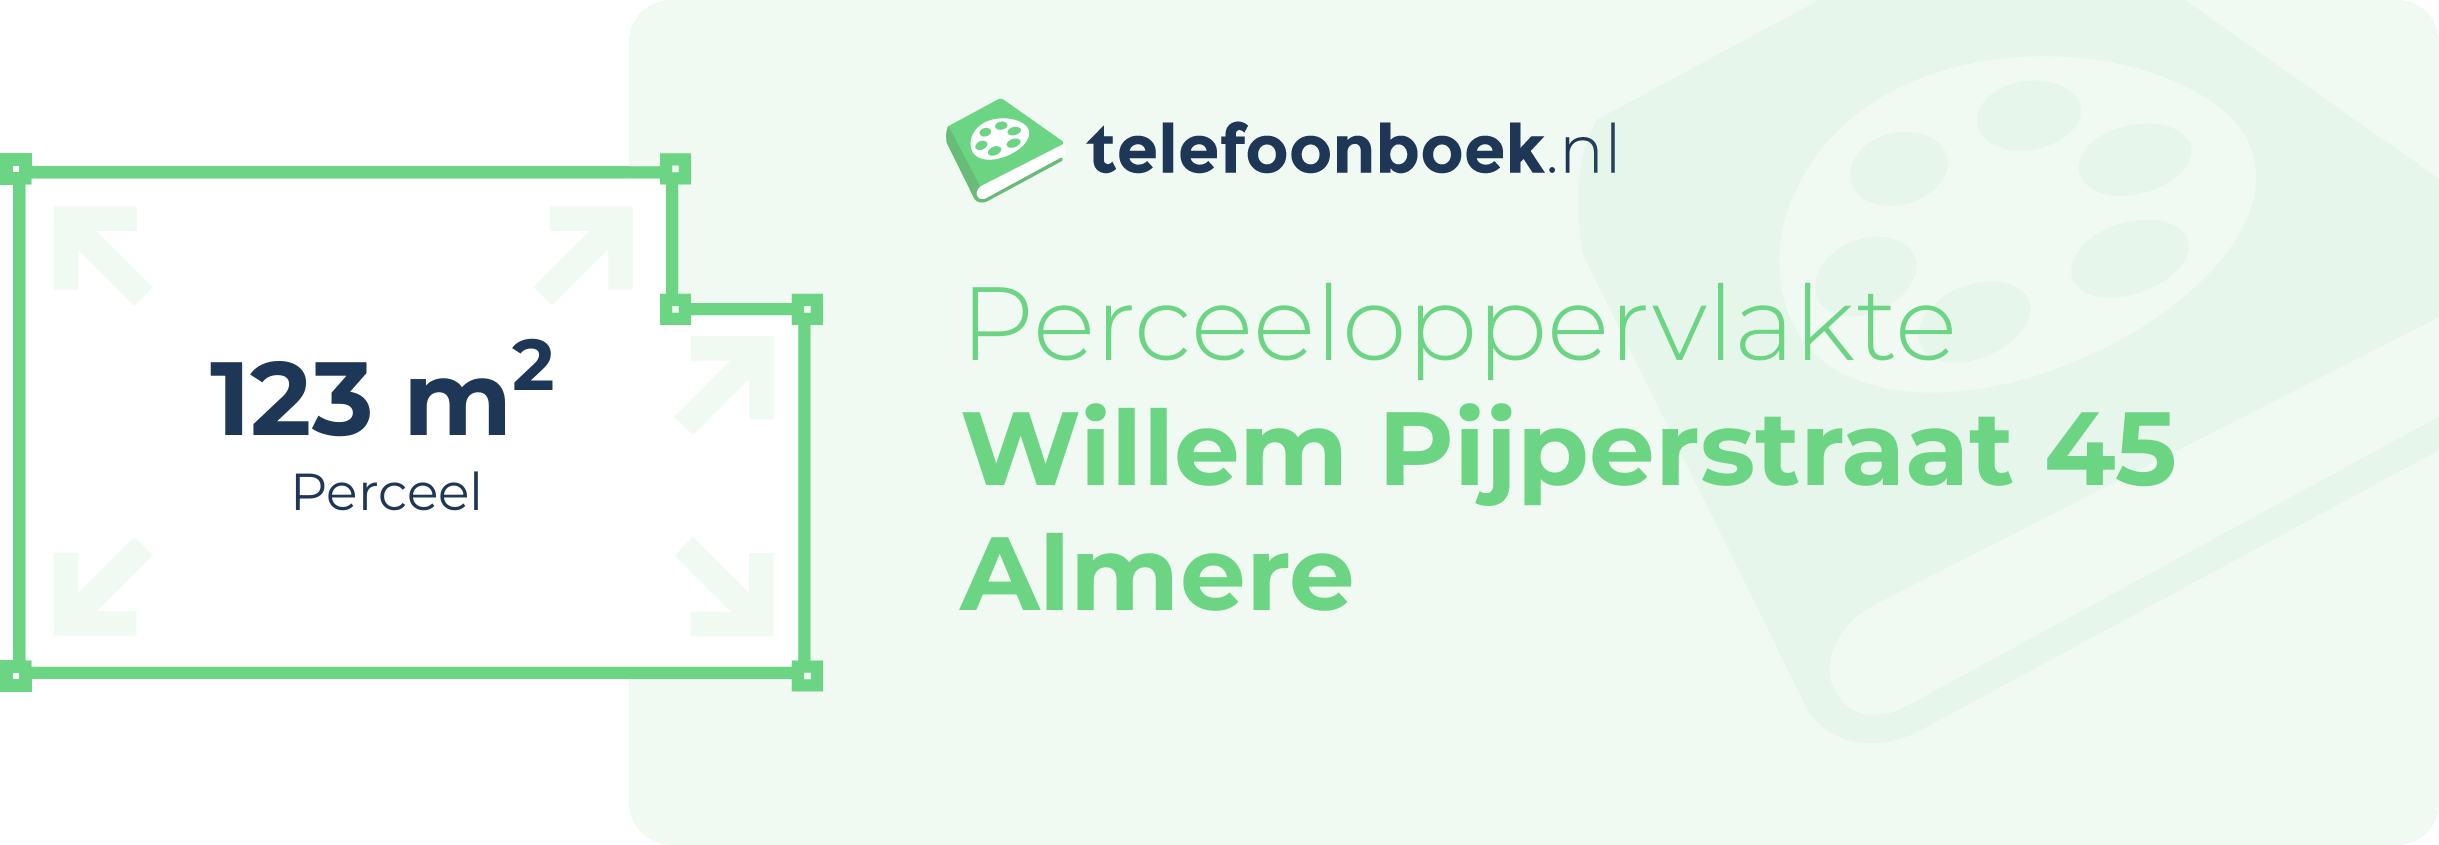 Perceeloppervlakte Willem Pijperstraat 45 Almere